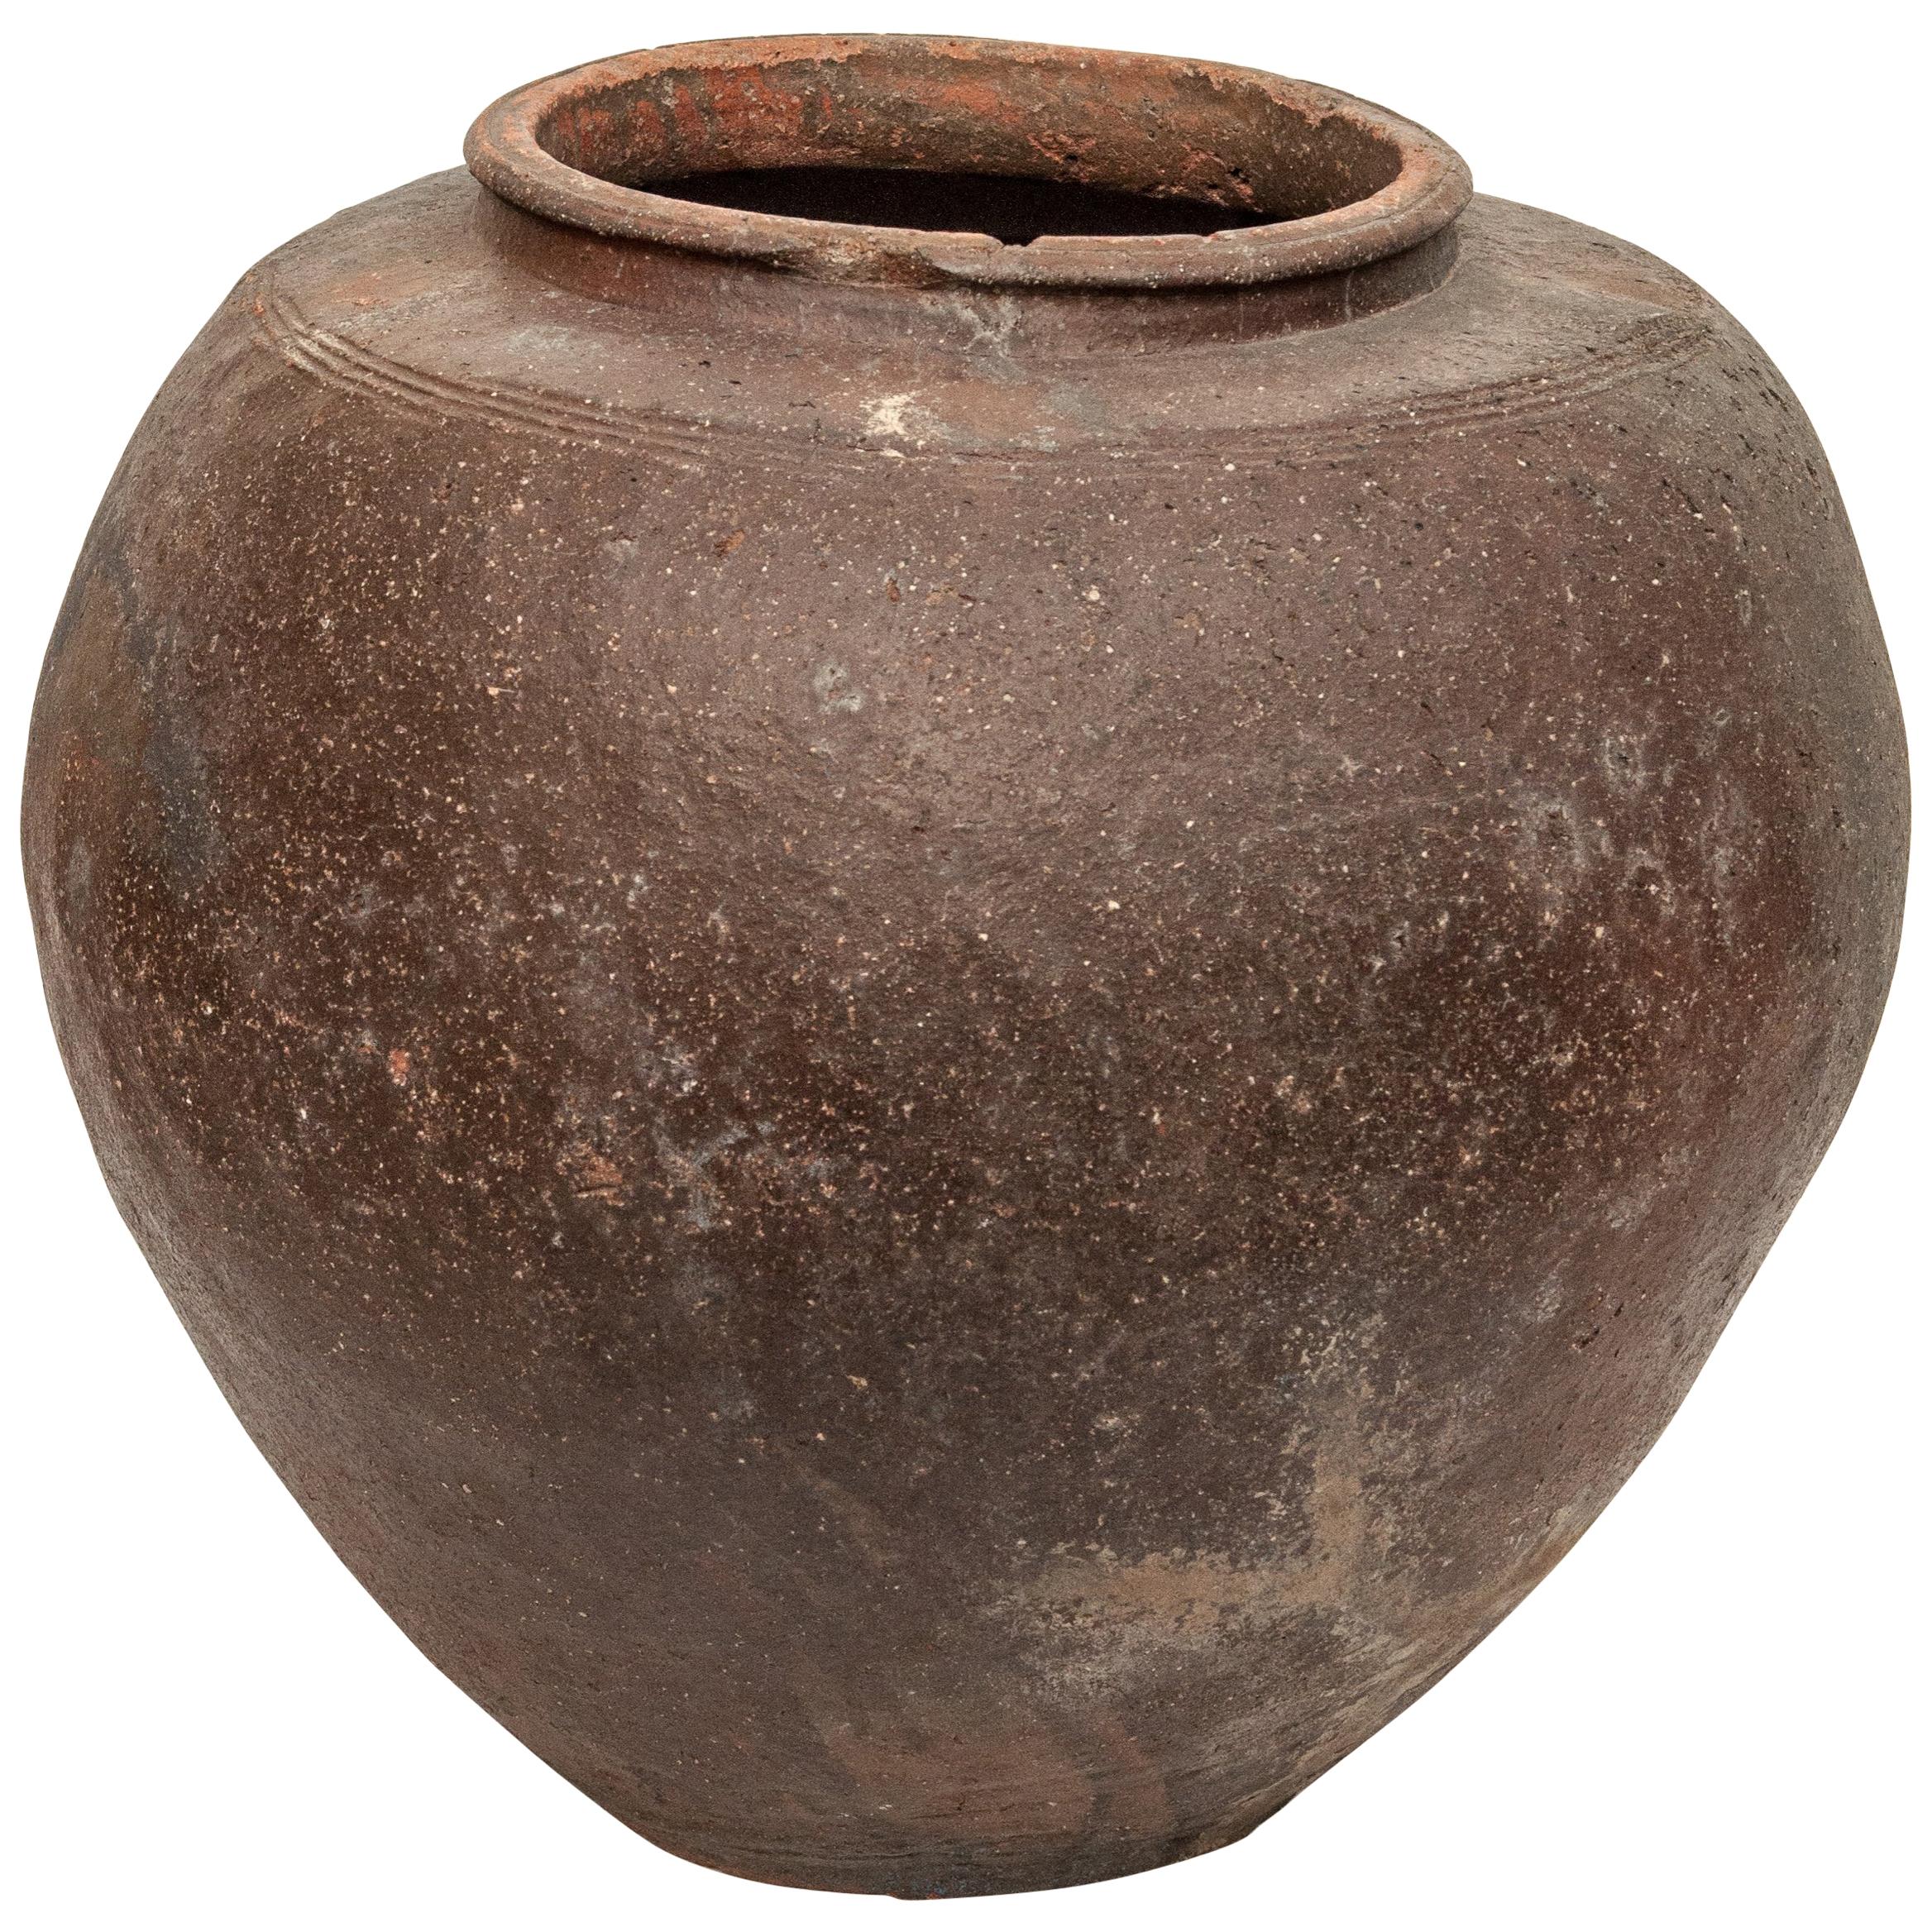 Large Vintage Storage or Water Jar from Borneo, Unglazed, Mid-20th Century